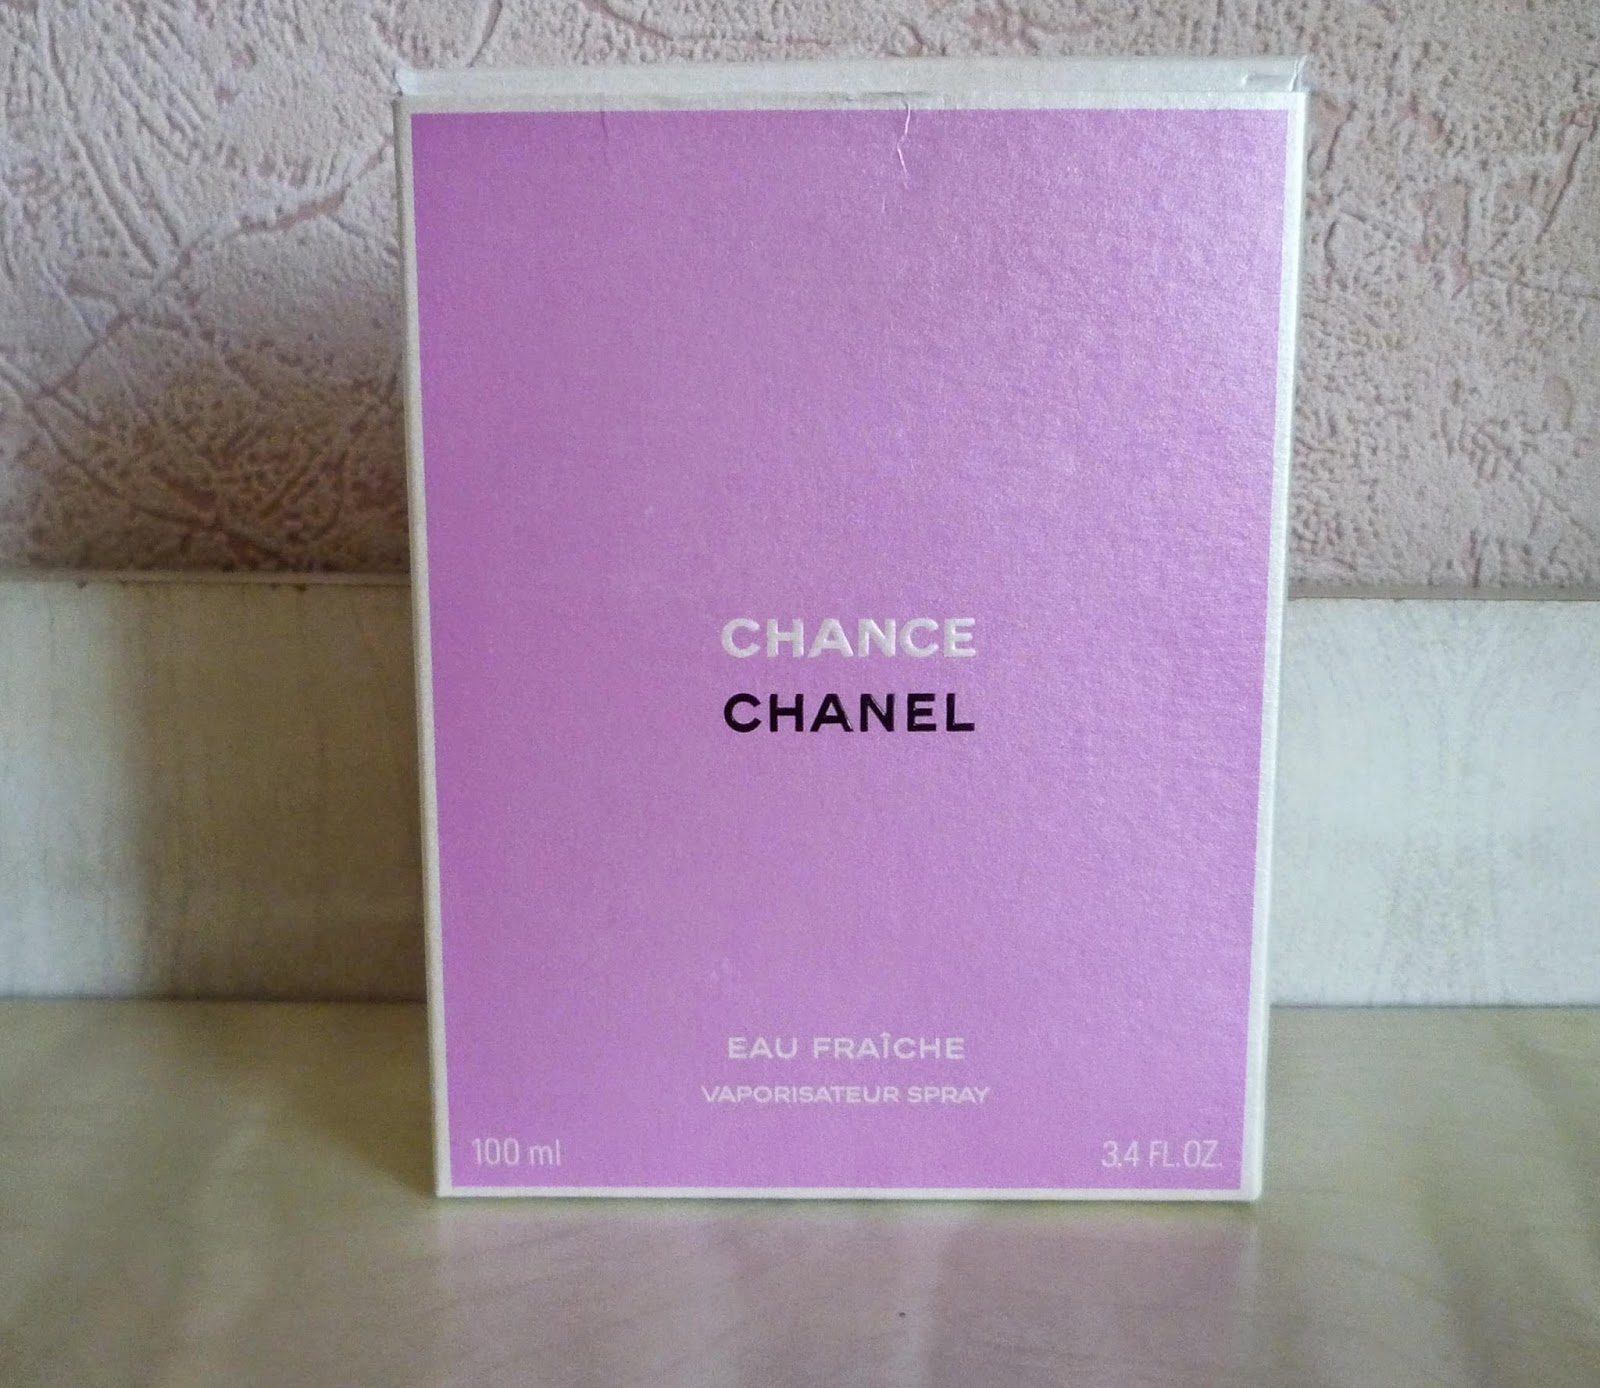 Духи в розовой упаковке. Chanel chance коробка. Chanel chance оригинальная коробка. Chanel chance духи упаковка духов. Духи Шанель шанс упаковка.